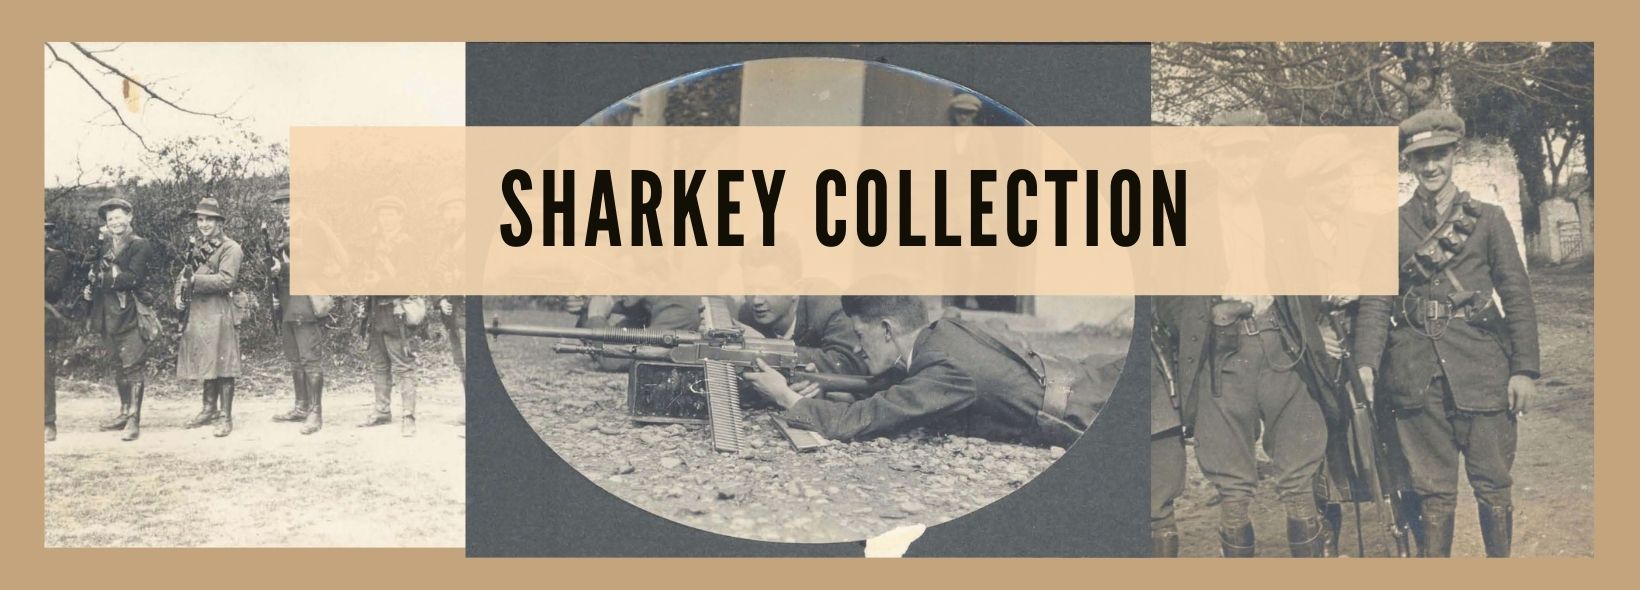 Sharkey-collection